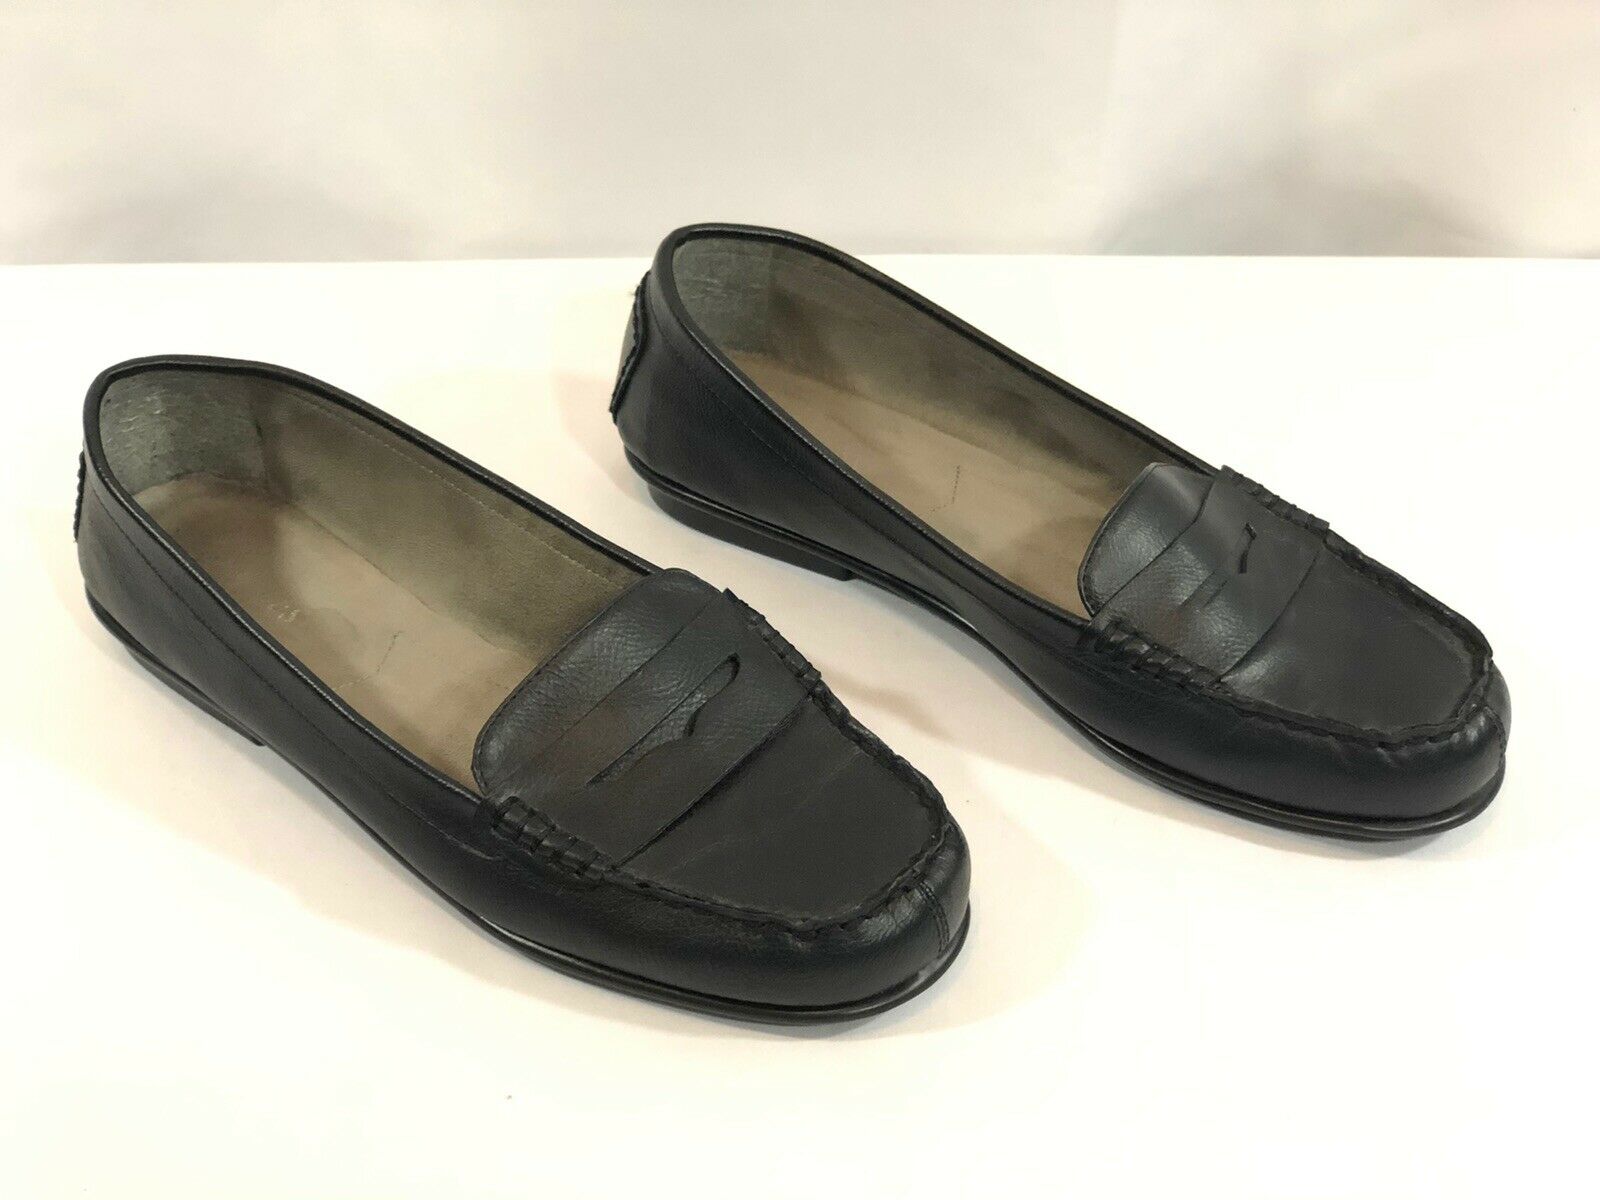 Aerosoles Women's Black Slip On Shoes Wedge Heel Pump Leather Shoes Size 8.5 